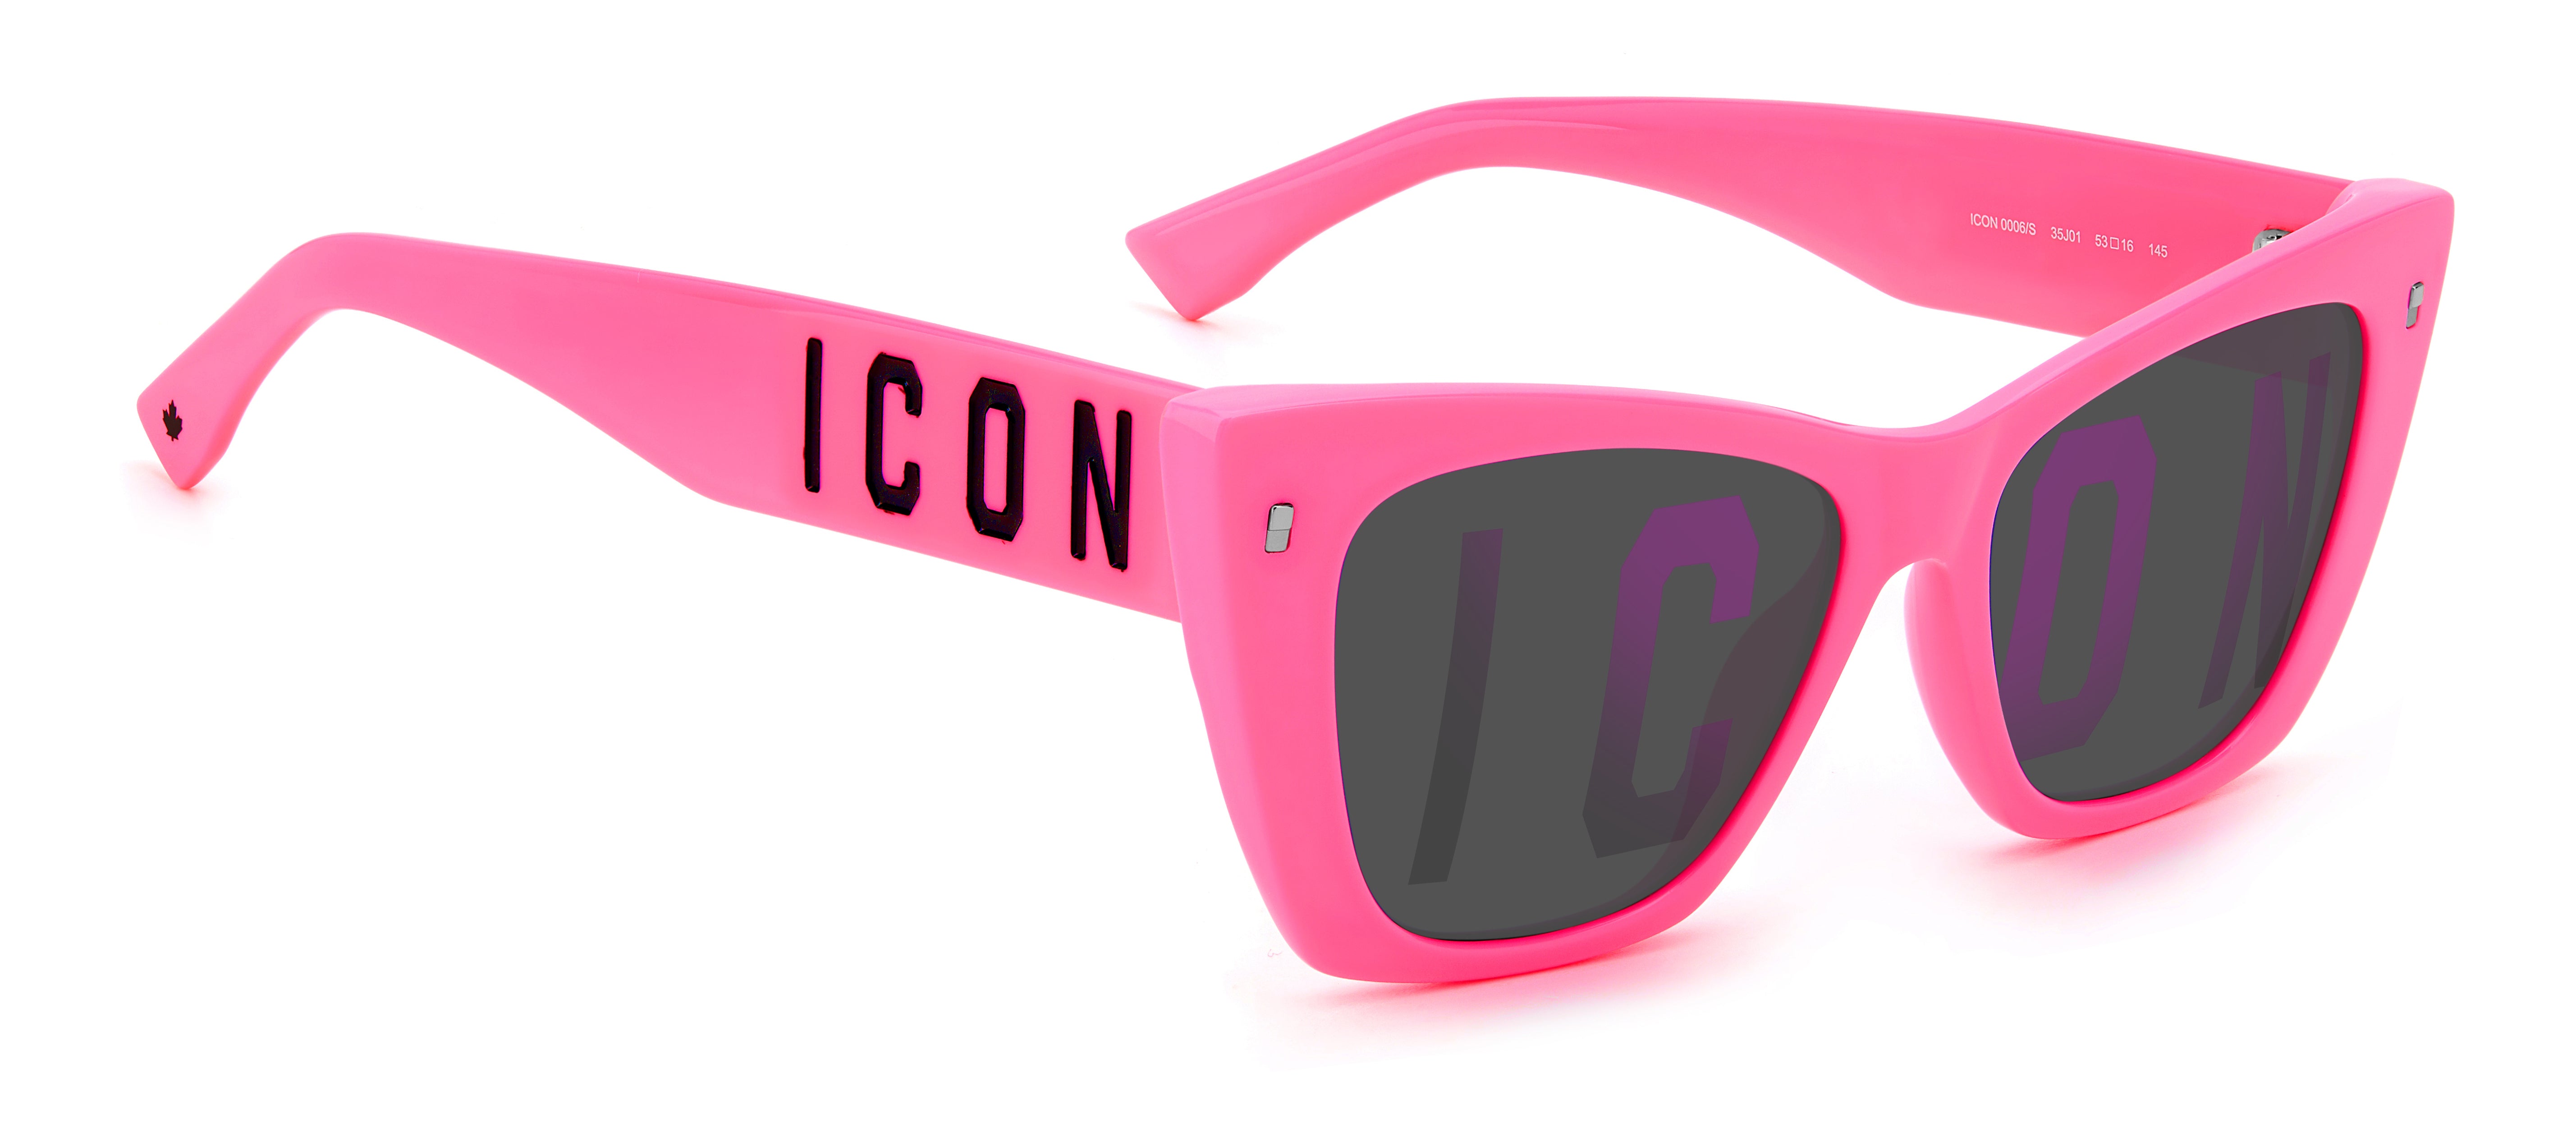 Dsquared2 ICON Cat-Eye Sunglasses